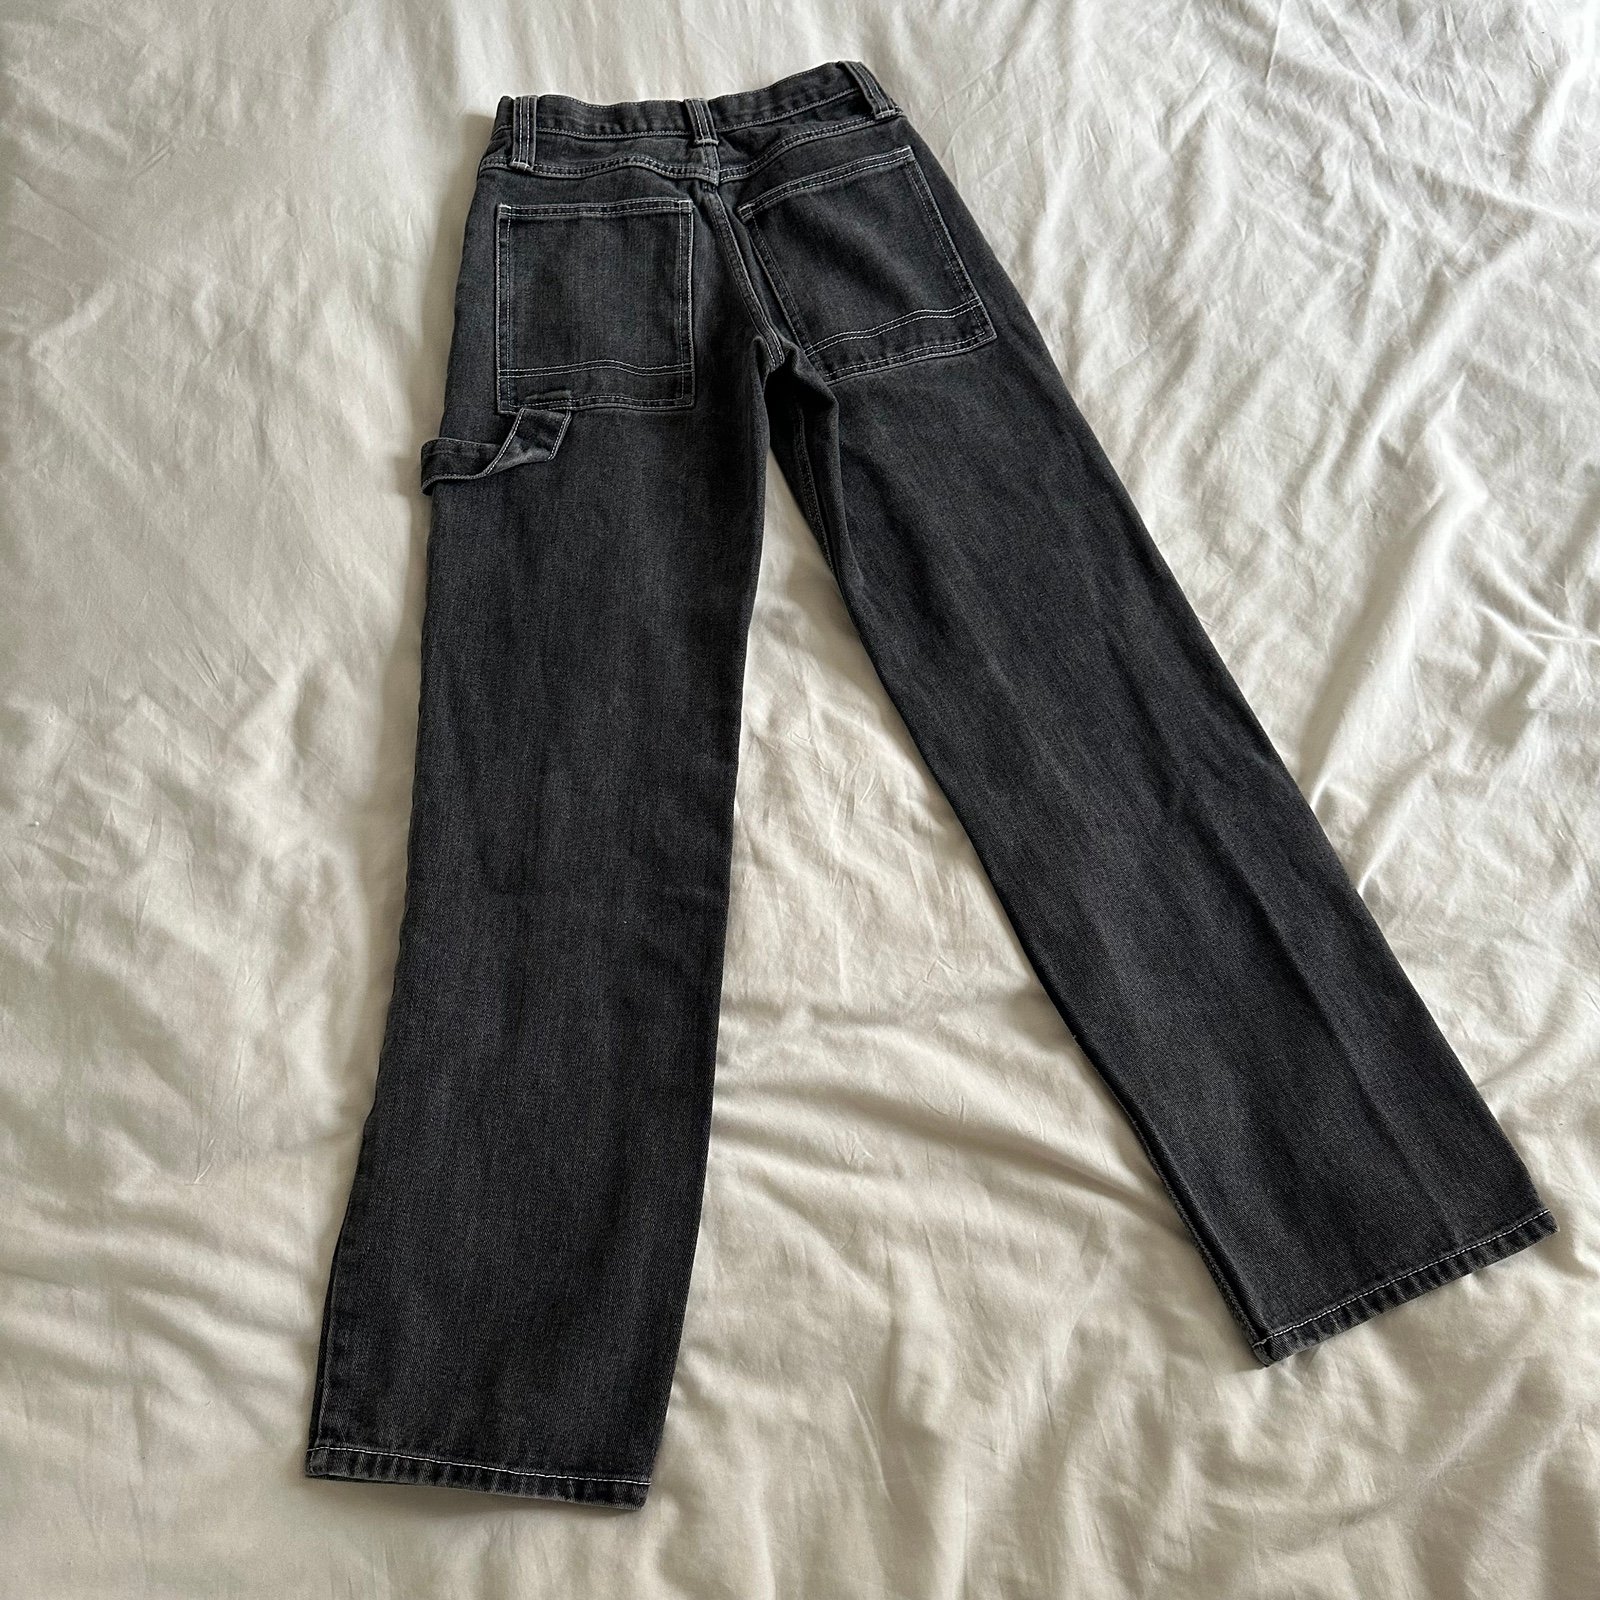 The Best Seller Pacsun jeans NRVodDMQ5 Wholesale